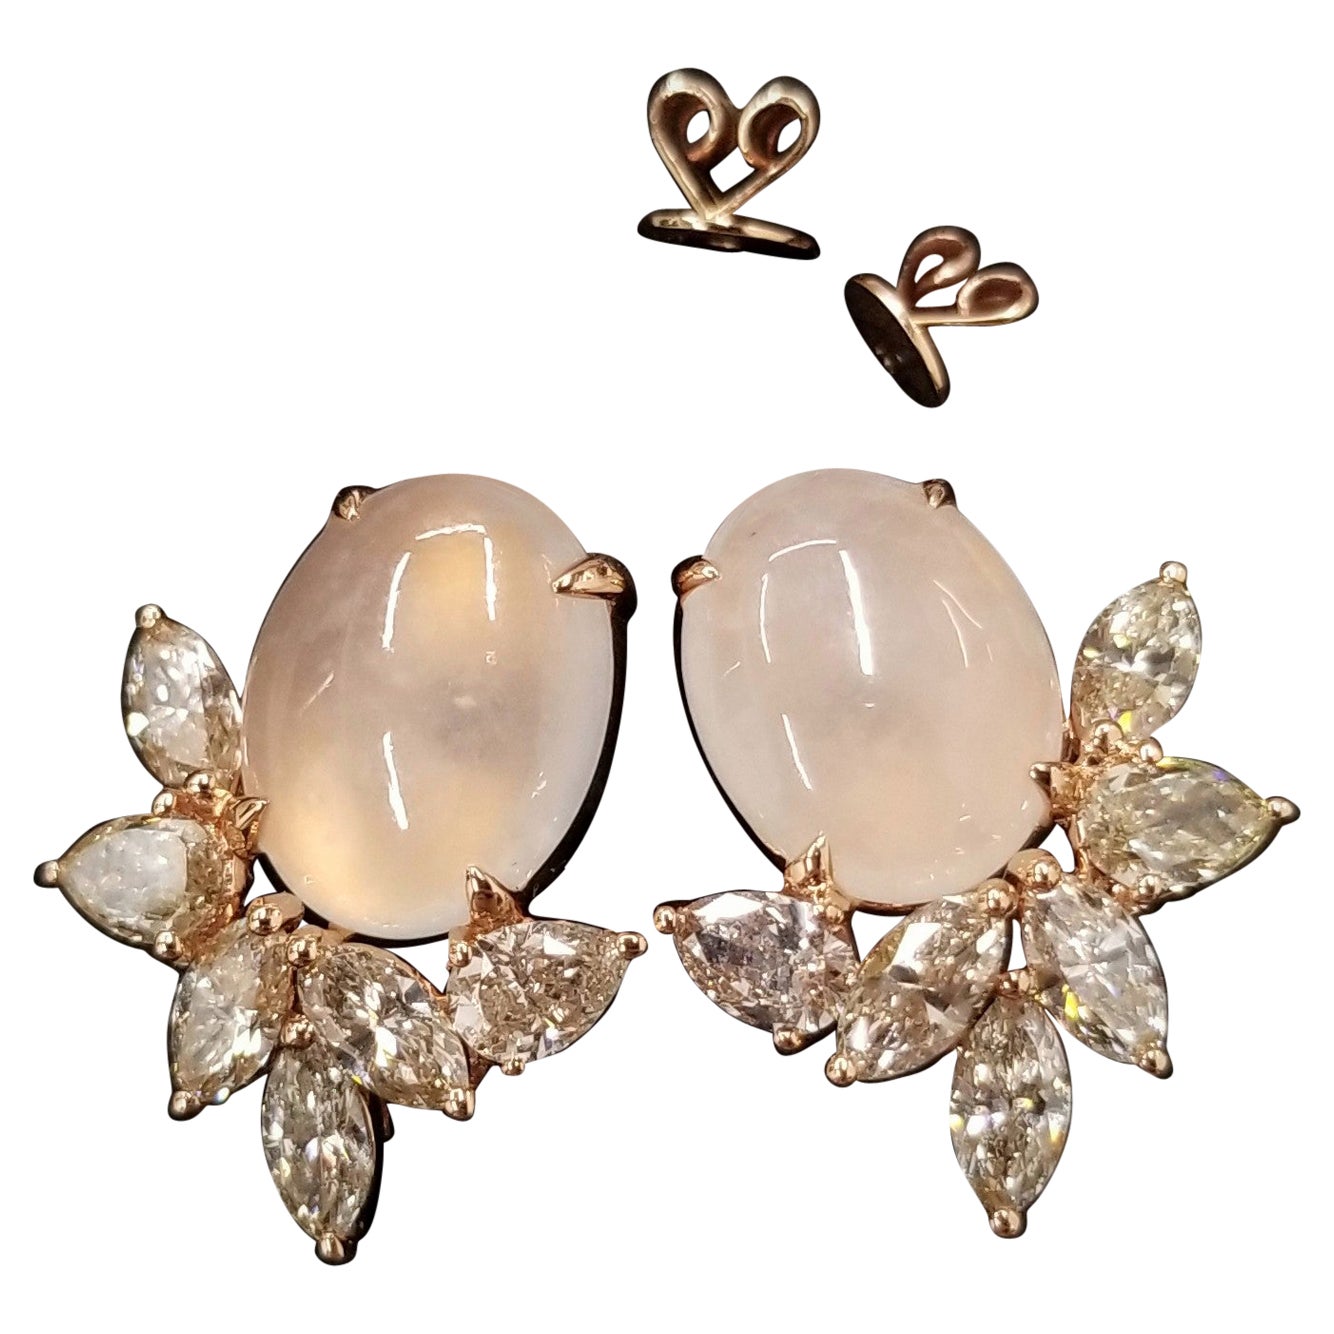 Certified 2.12 Carat Diamond & White Jade (Fei Cui) Earrings in 18K Rose Gold